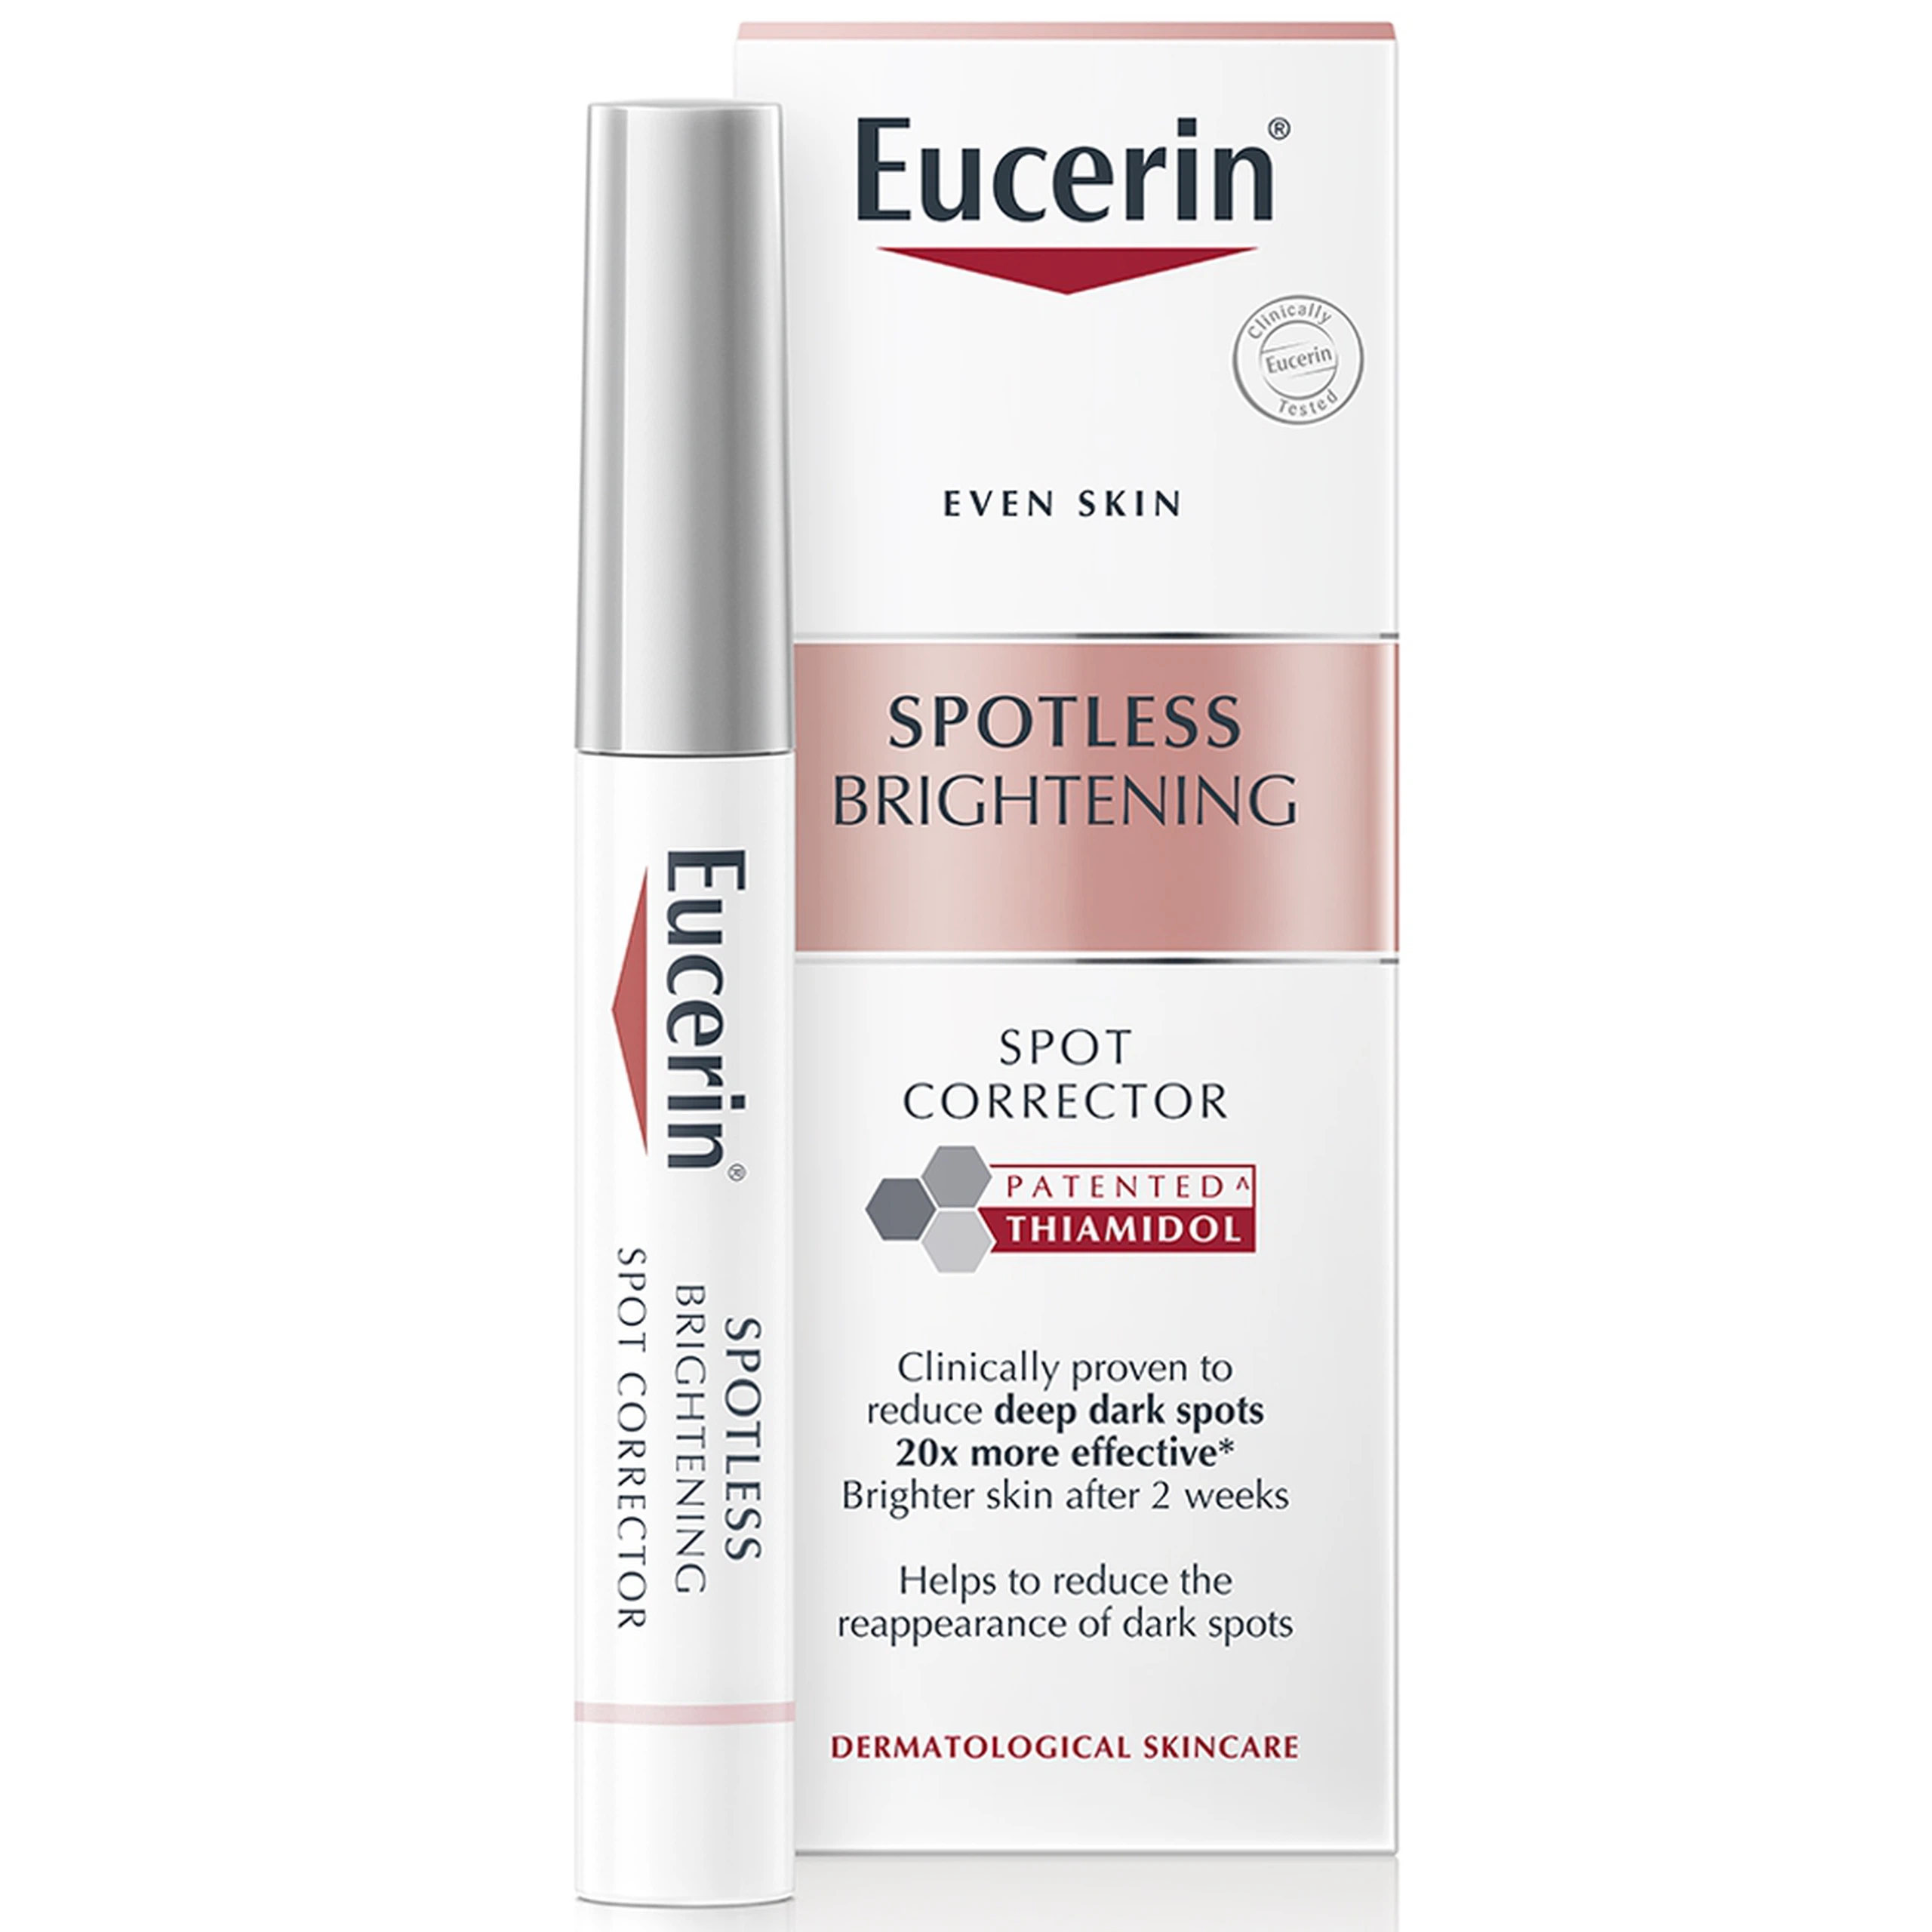 Kem dưỡng giảm đốm nâu Eucerin Even Skin Spotless Brightening Spot Corrector (5ml)